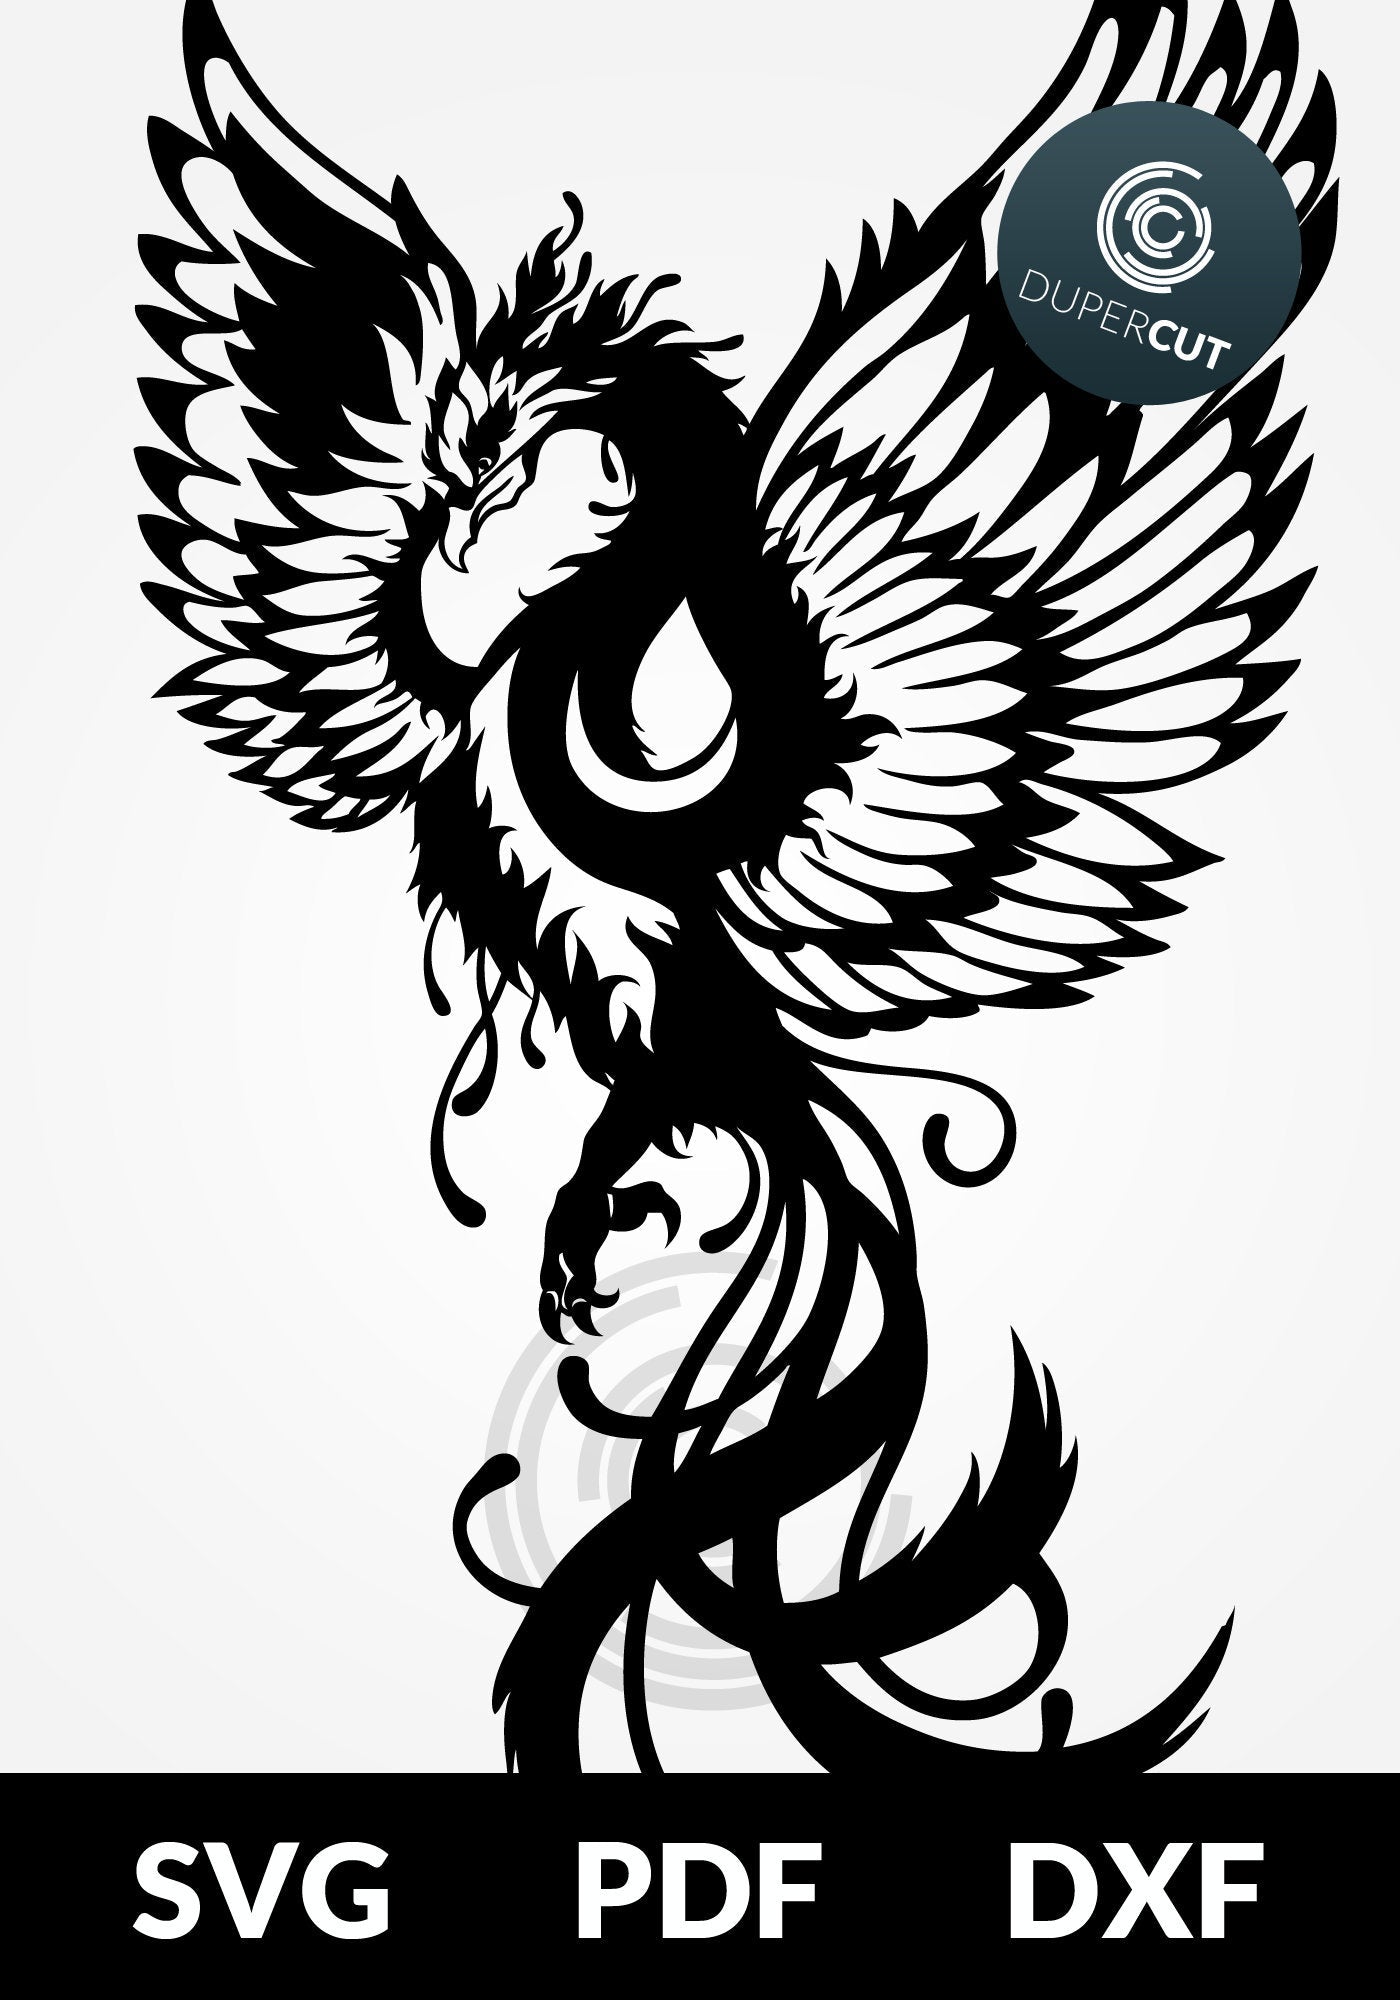  Phoenix tattoo template, original black illustration  - SVG DXF JPEG files for CNC machines, laser cutting, Cricut, Silhouette Cameo, Glowforge engraving